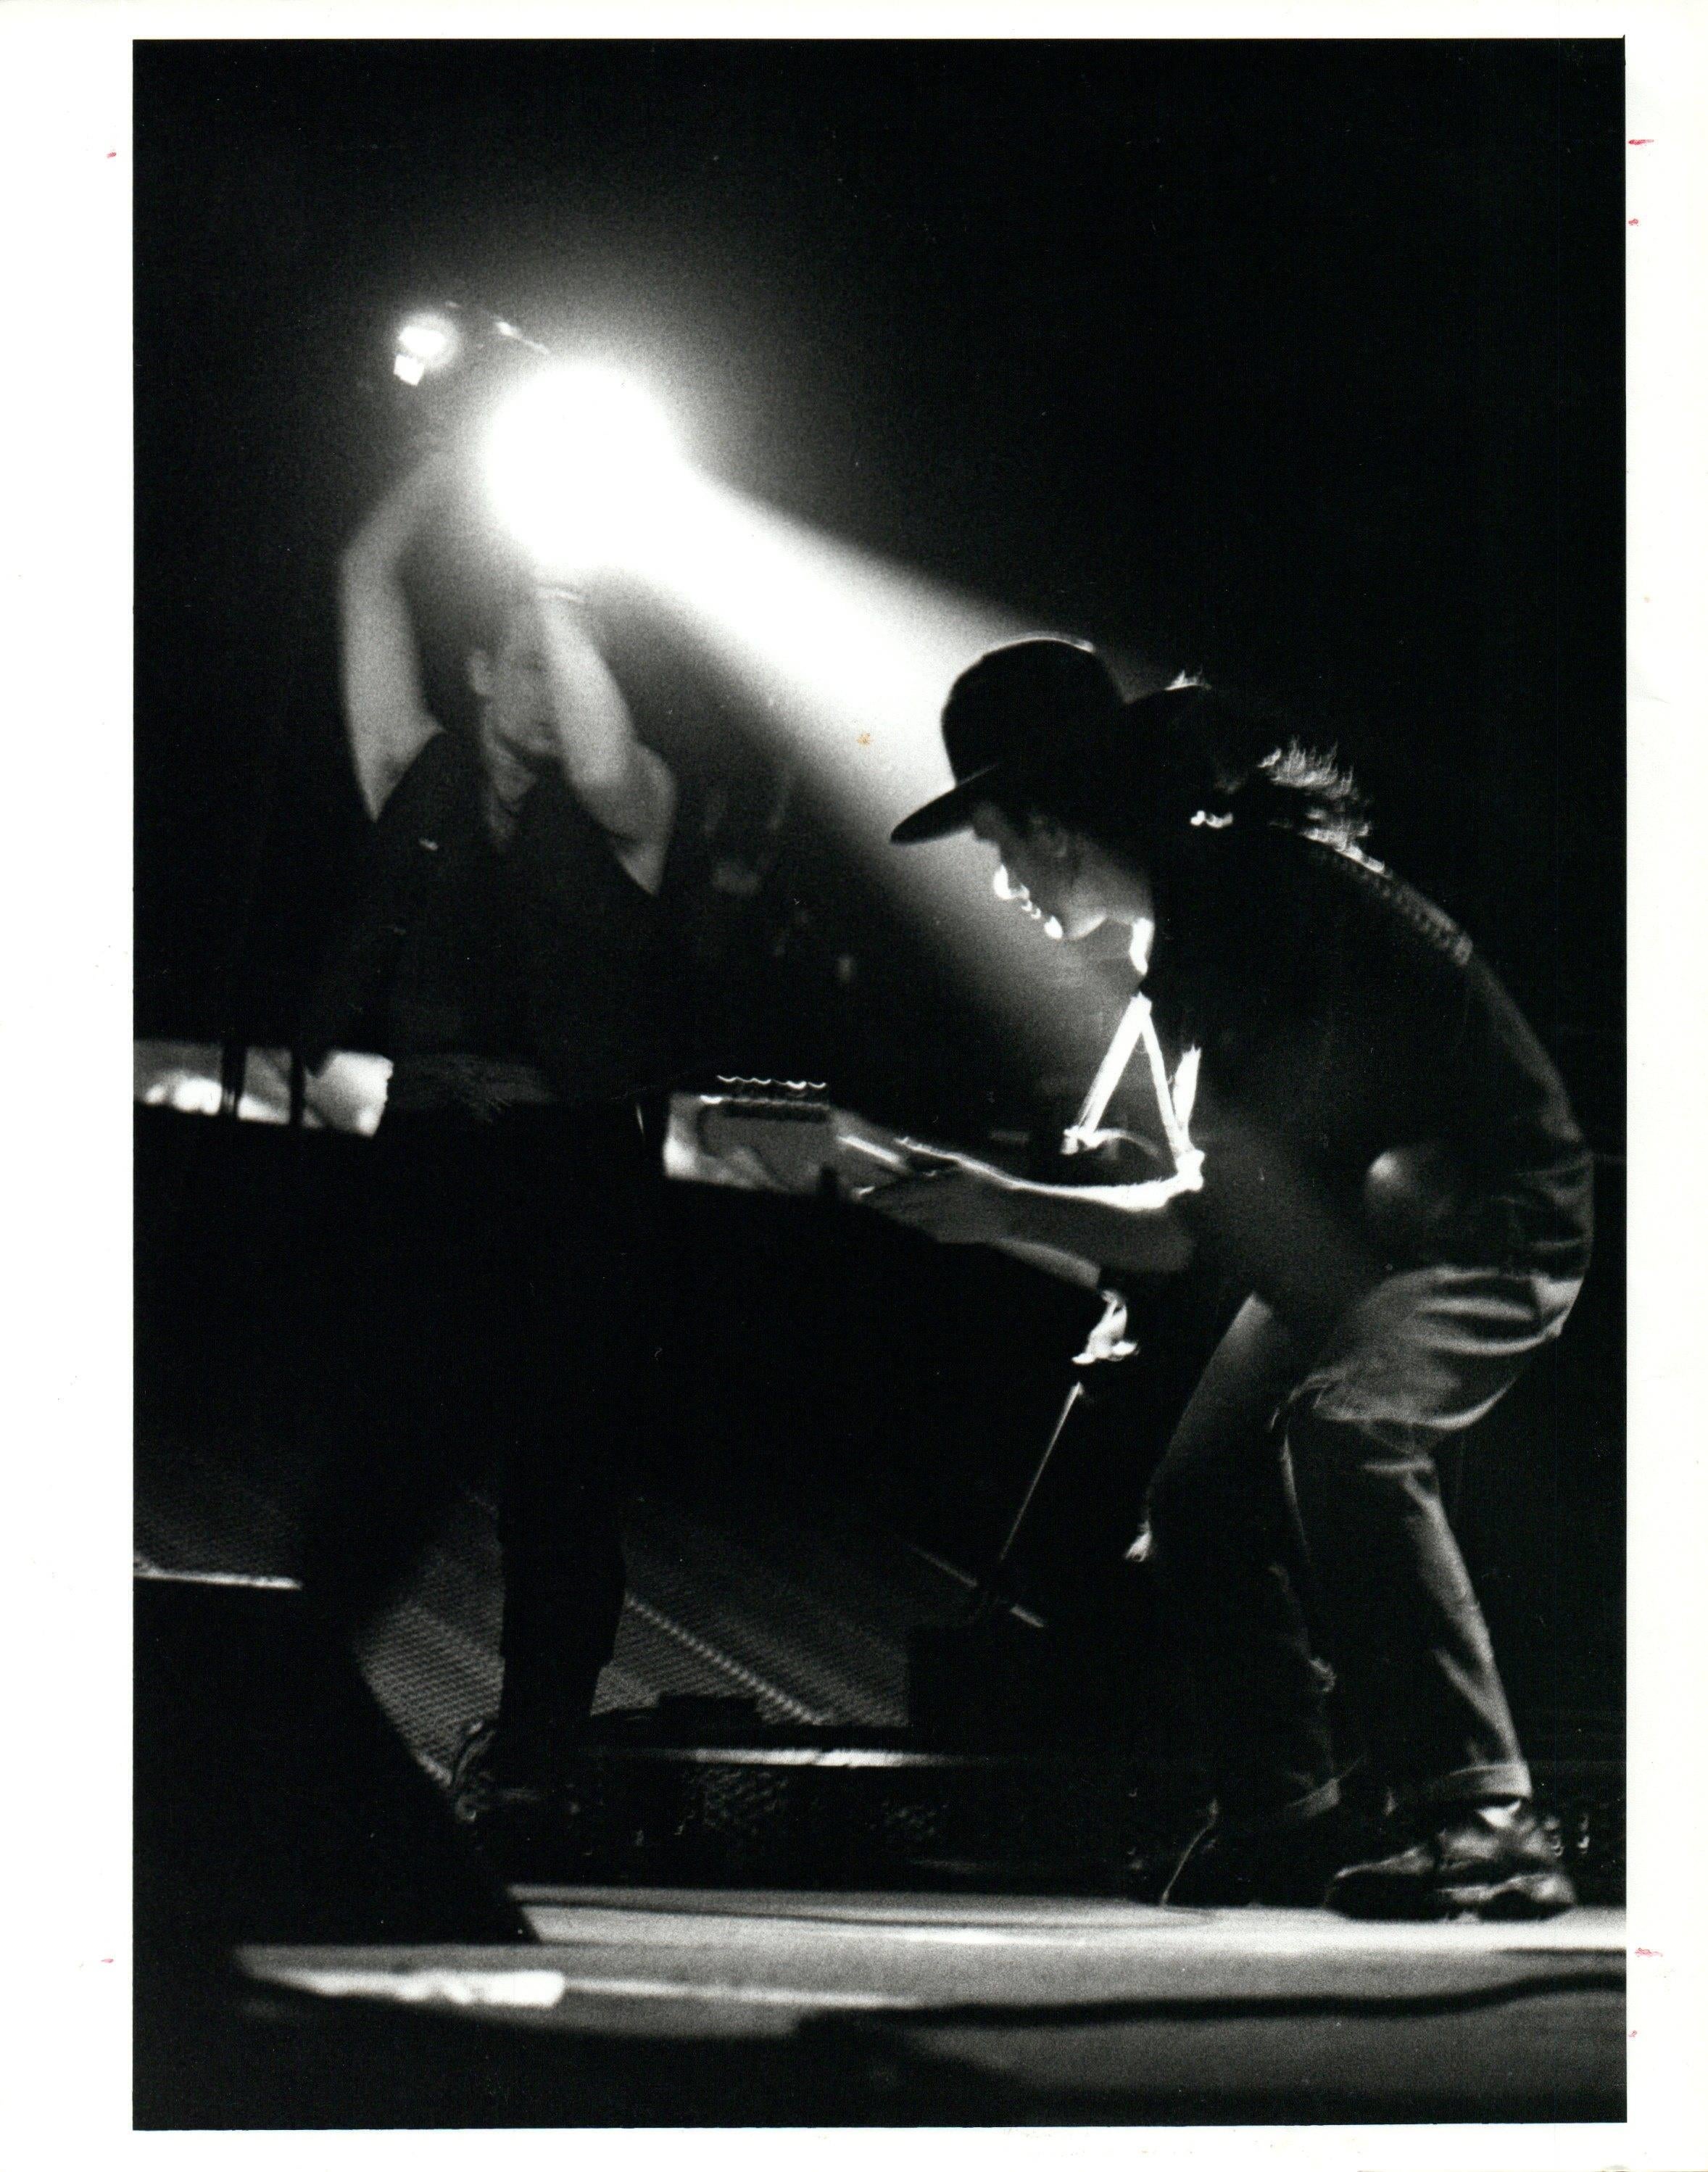 Adrian Boot Portrait Photograph - U2 on Stage Vintage Original Photograph